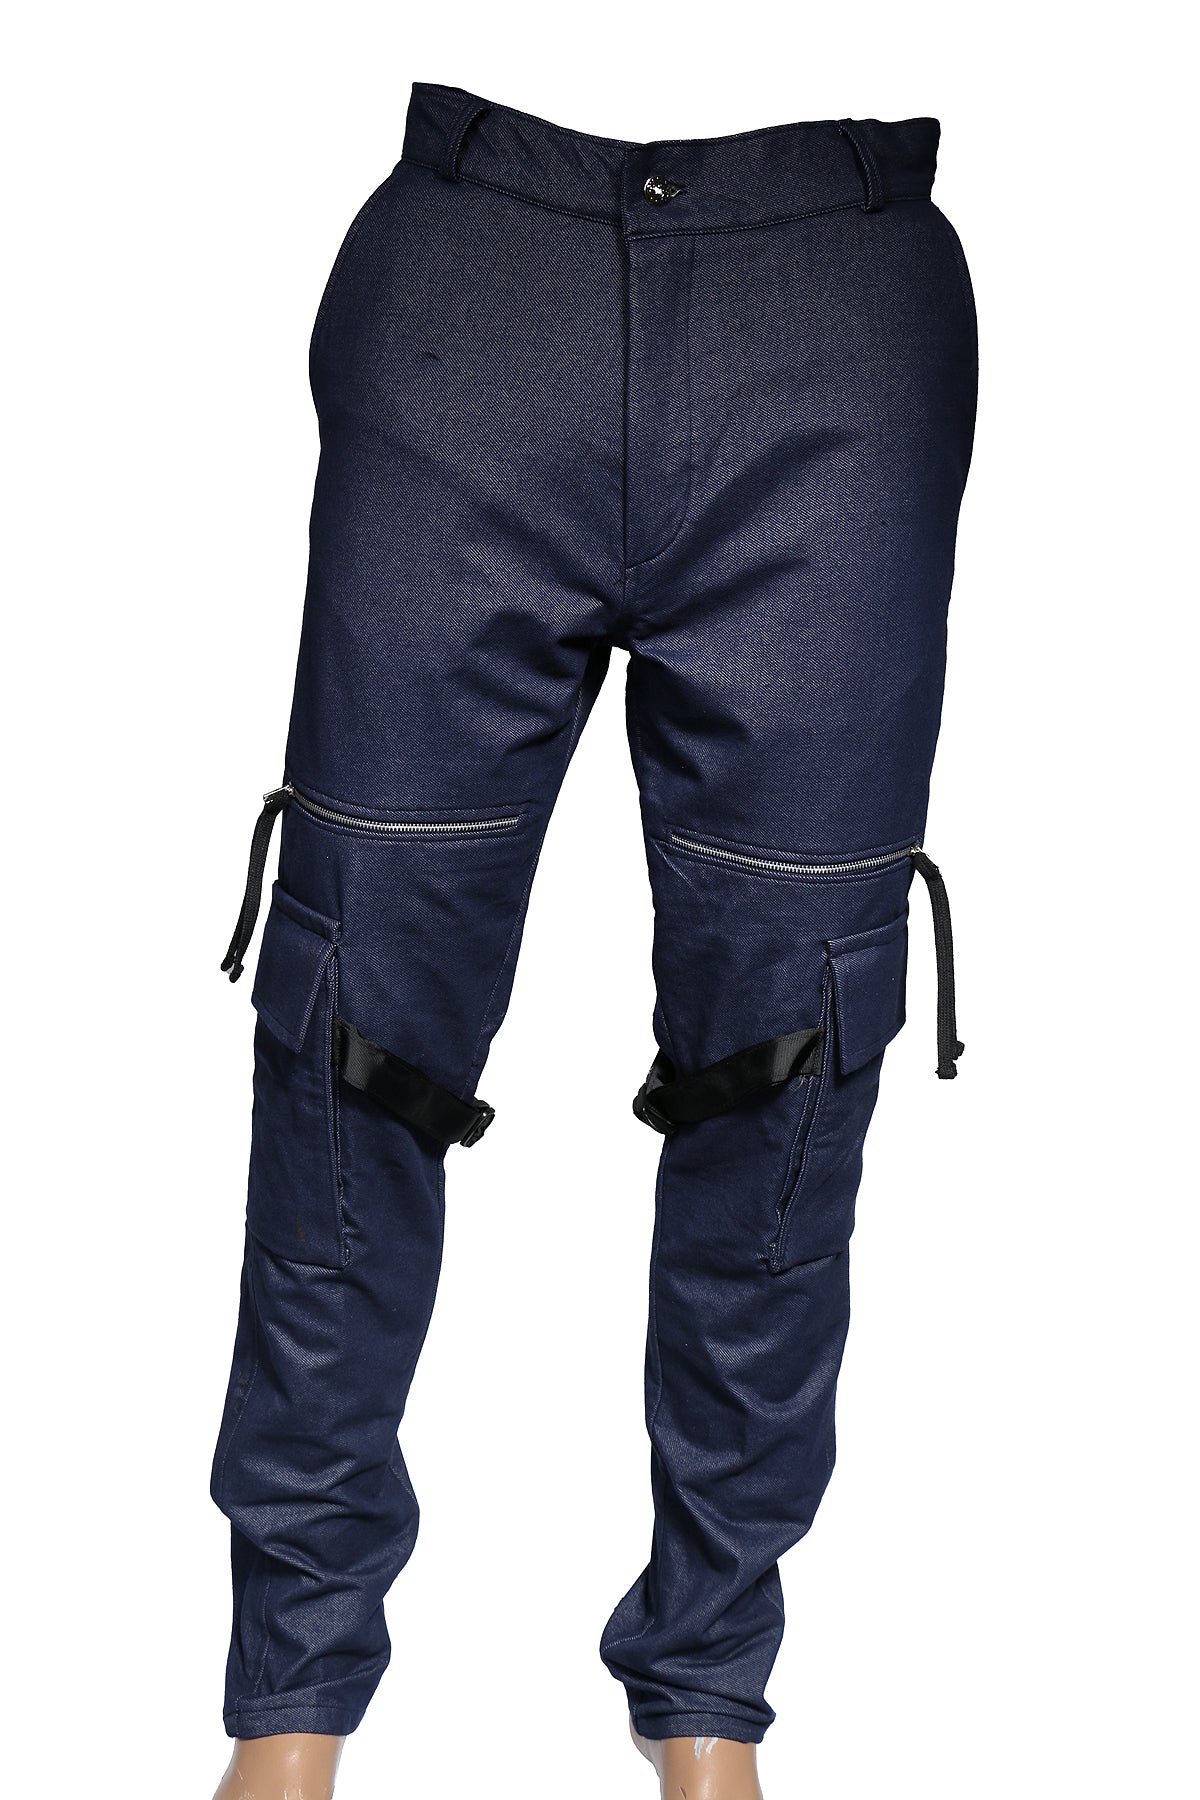 Modern blue denim jeans with straps